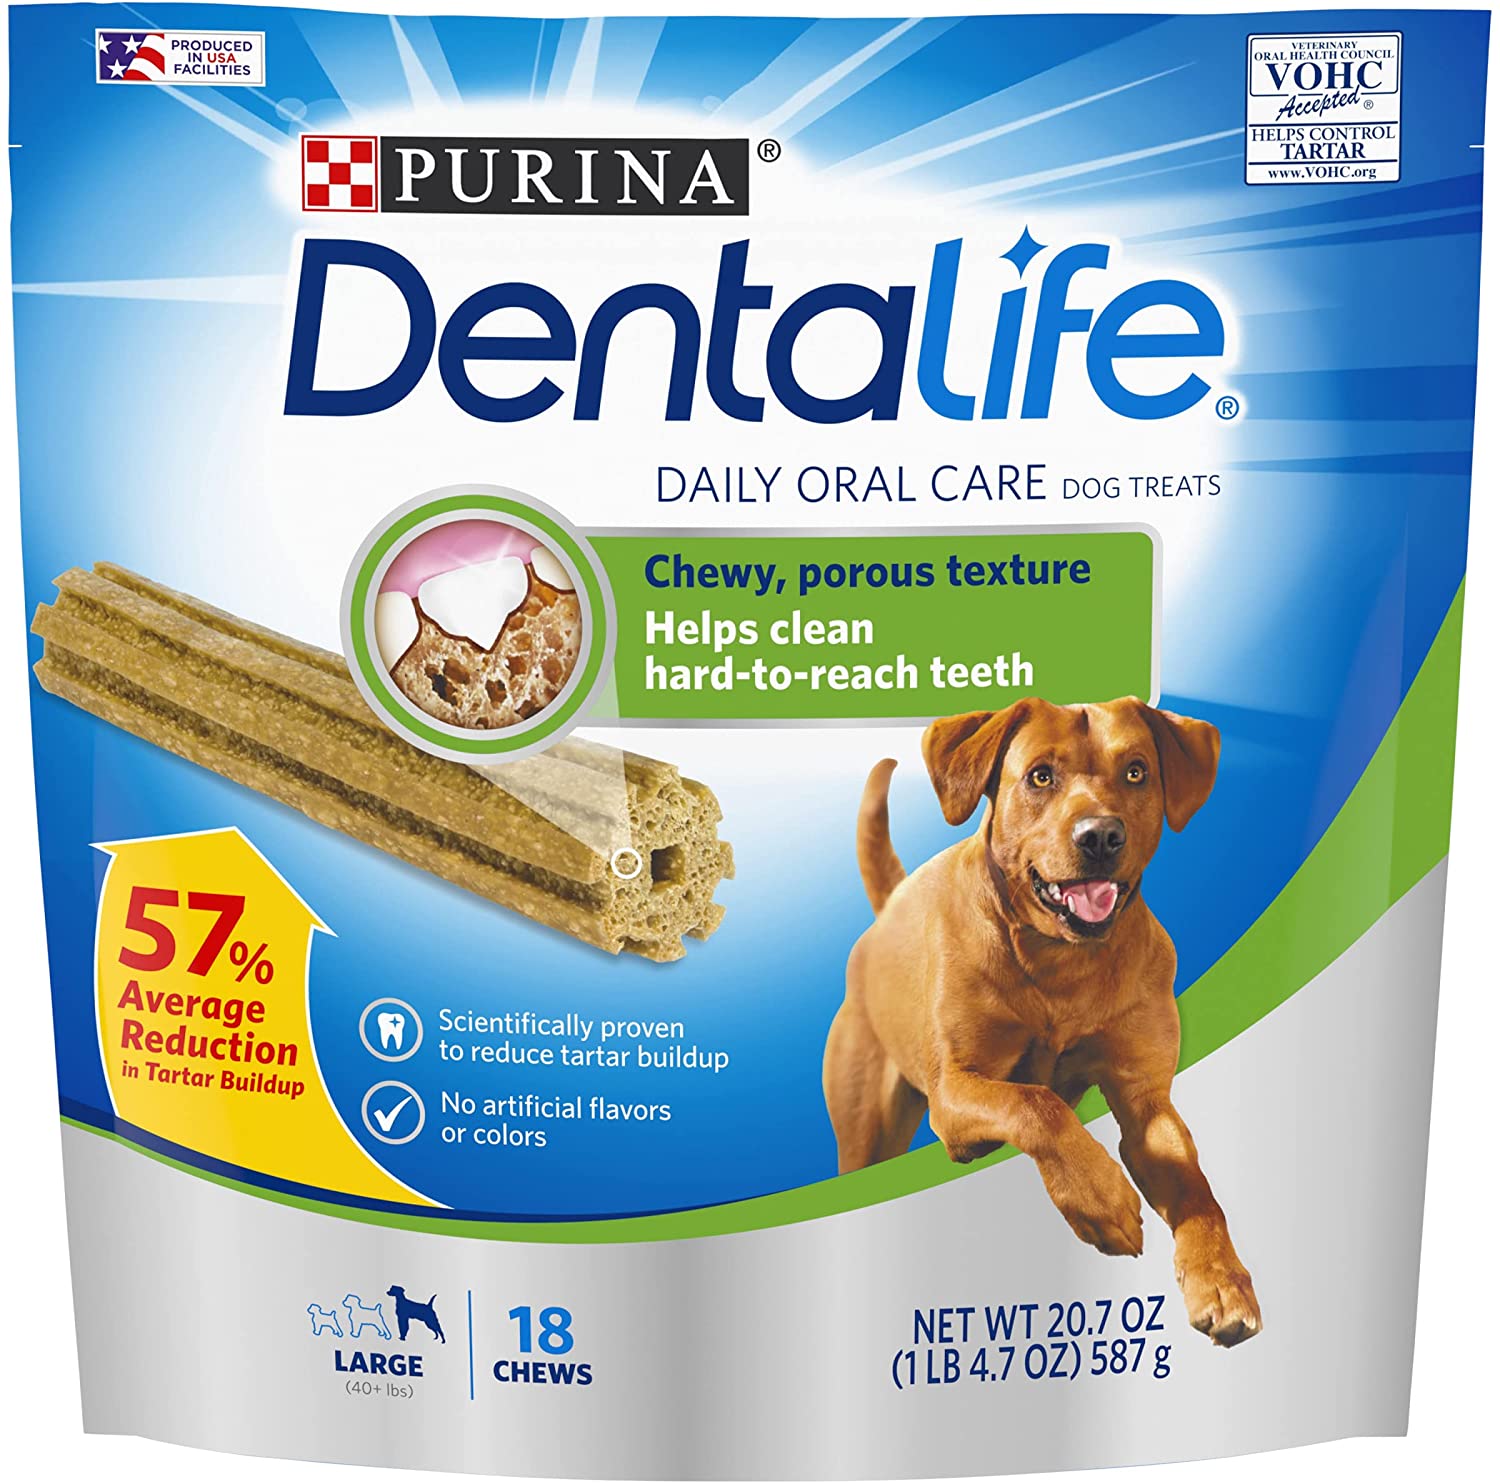 Purina DentaLife Daily Oral Care